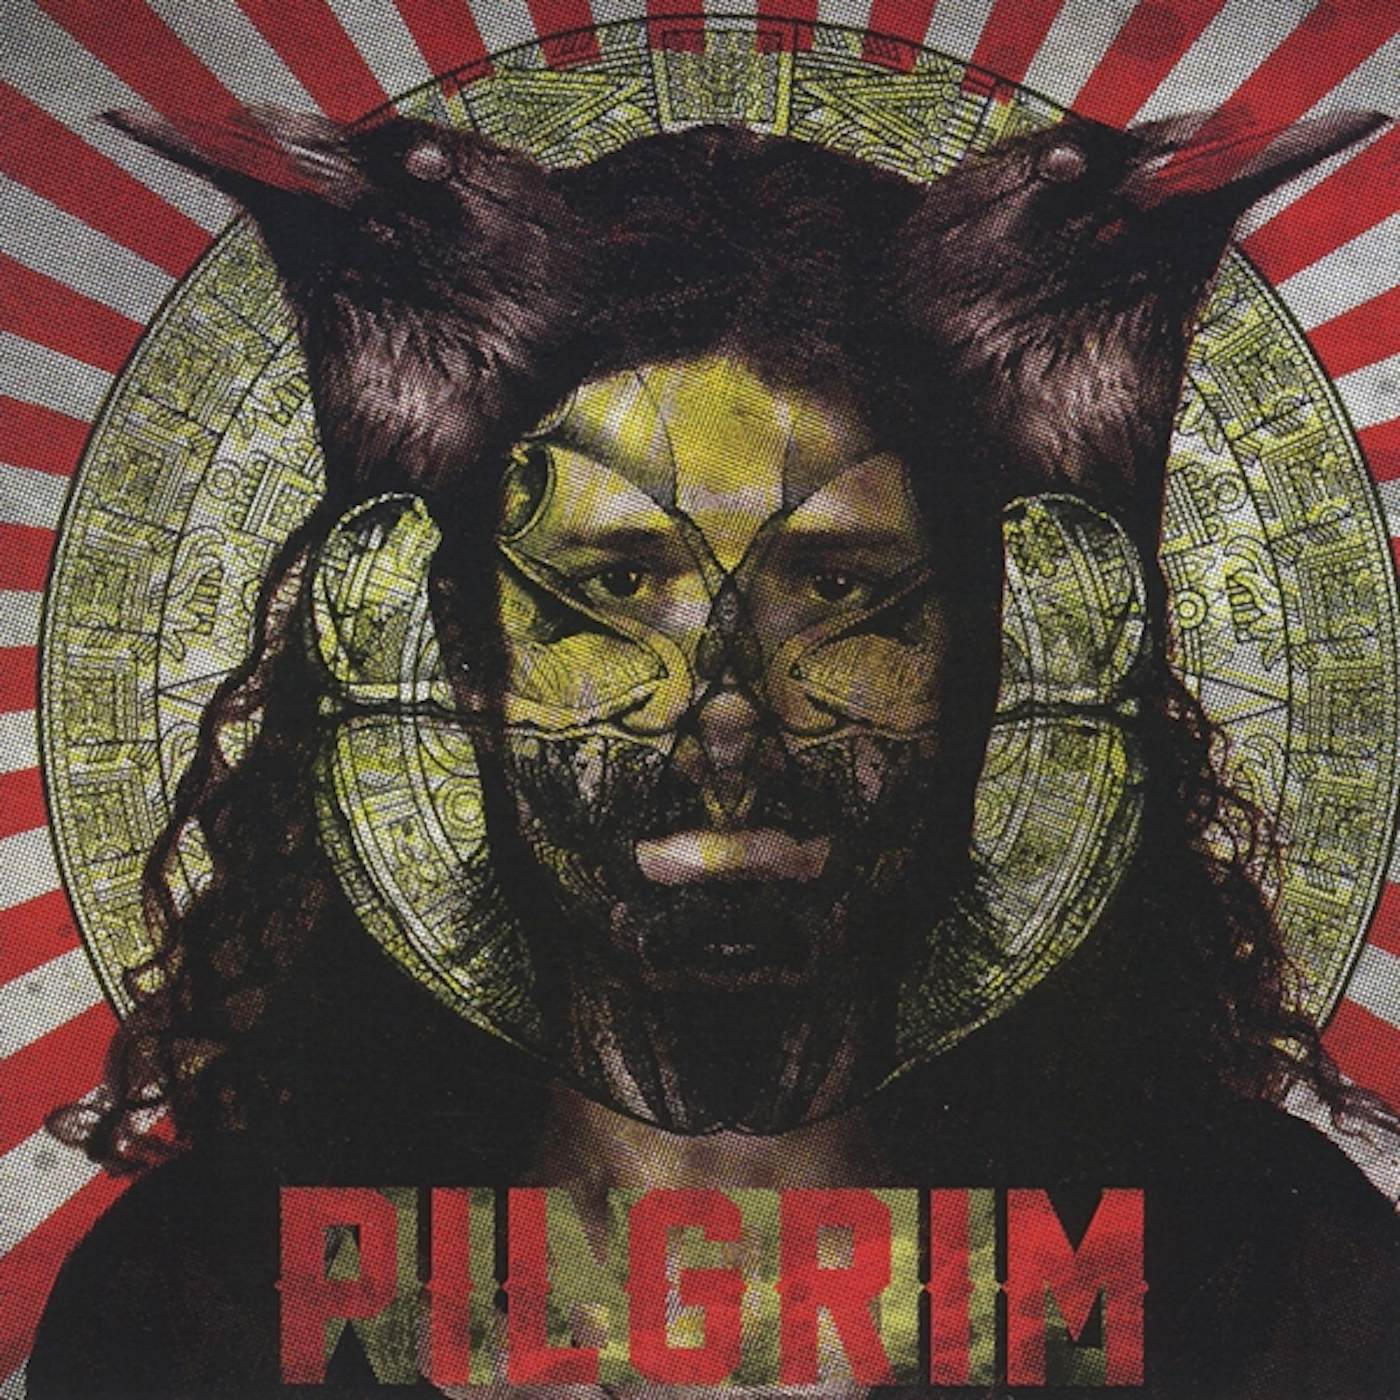 The Pilgrim CD